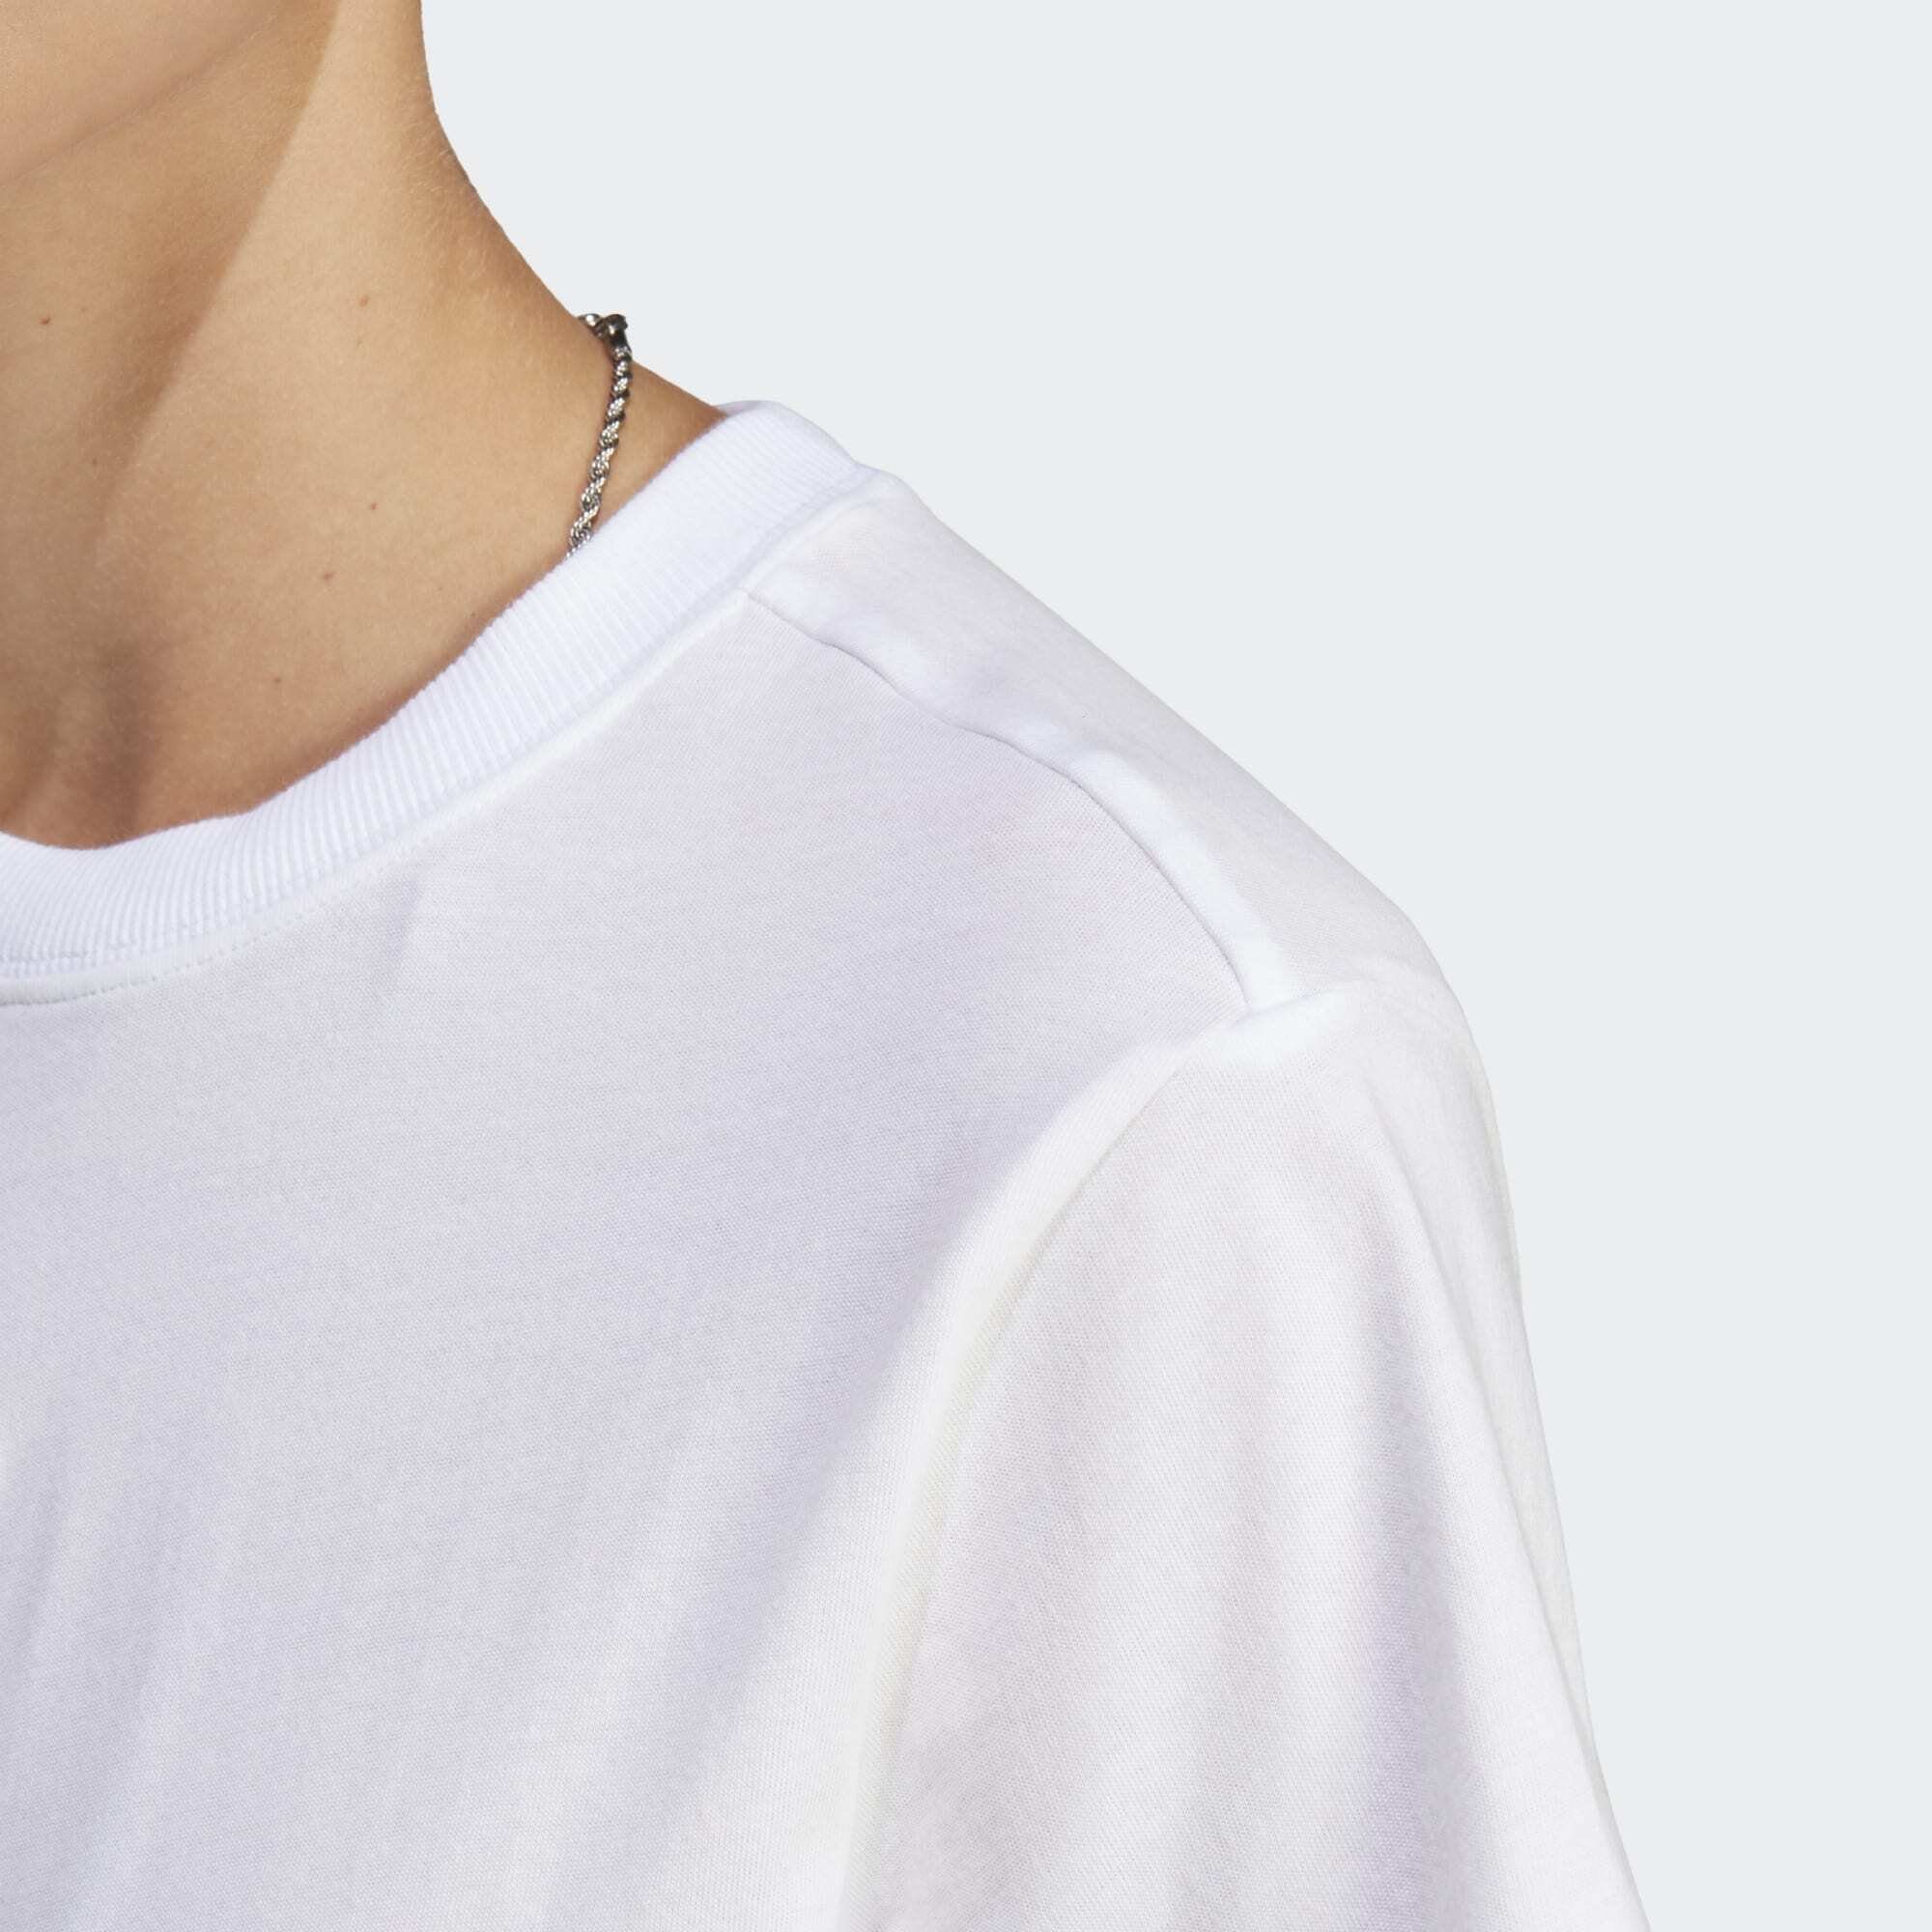 adidas Originals T-Shirt ADICOLOR ESSENTIALS White T-SHIRT REGULAR